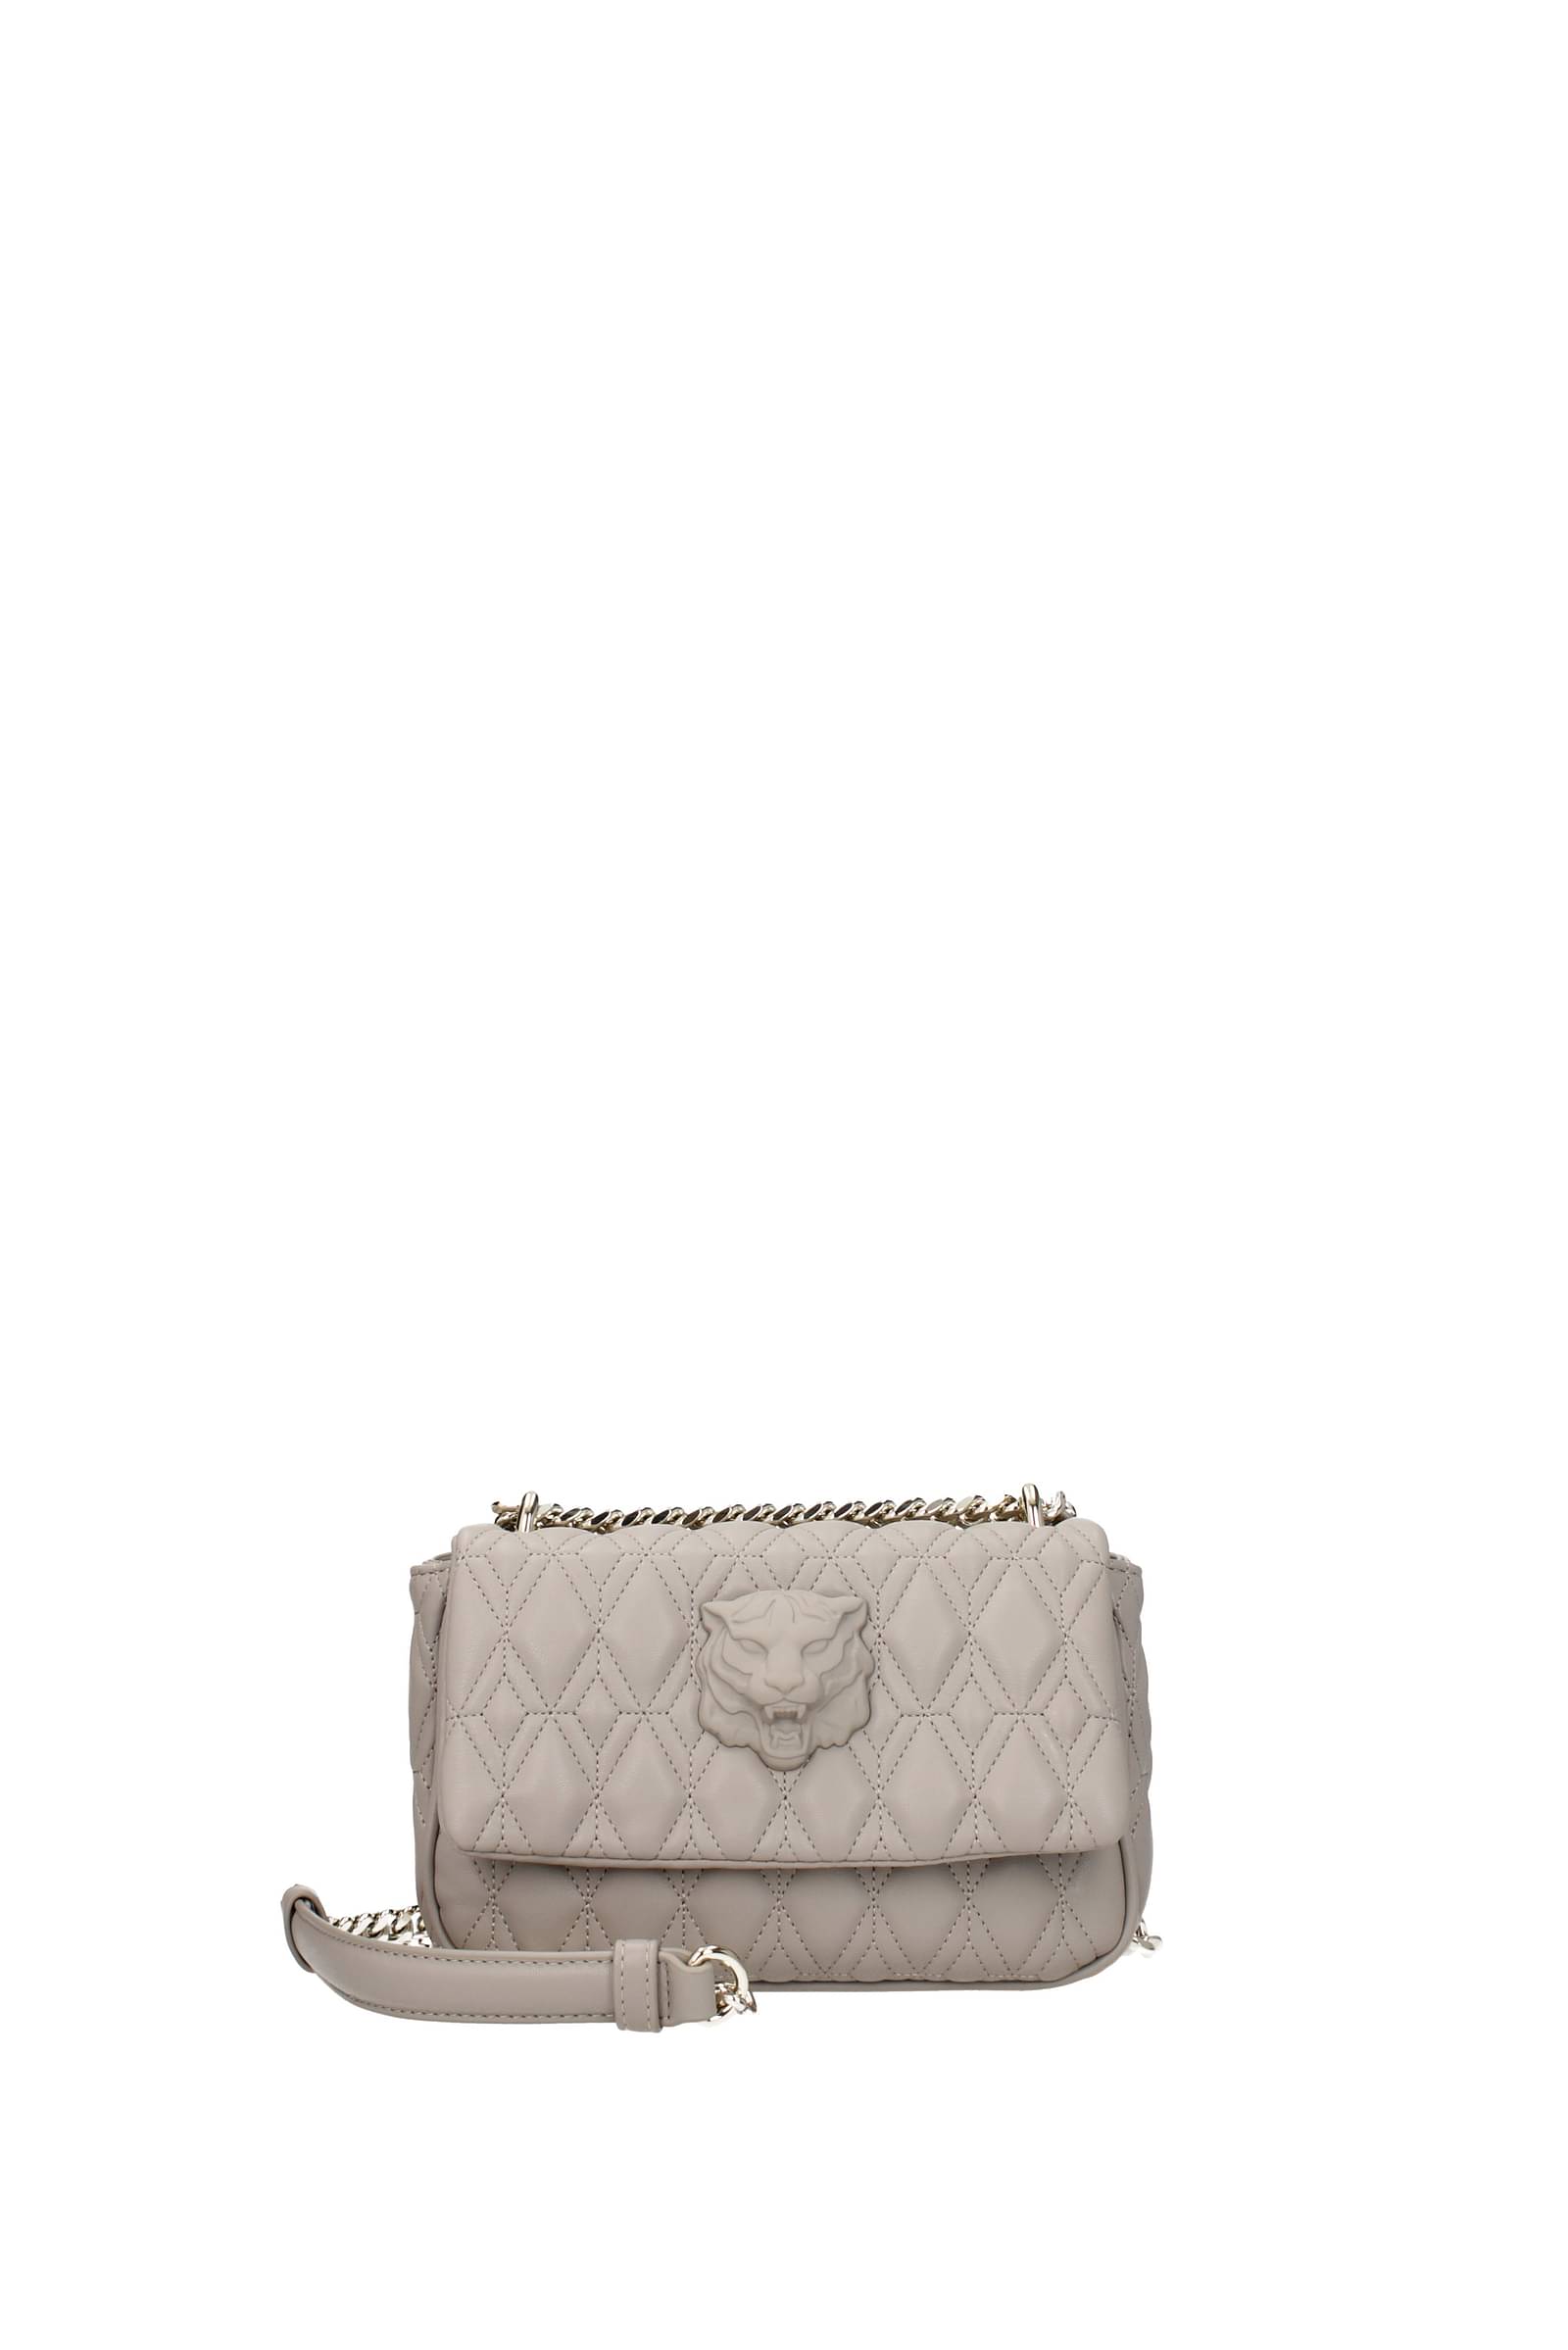 Just Cavalli Chain Handbag Purse beige Gold hardware leather bag | eBay